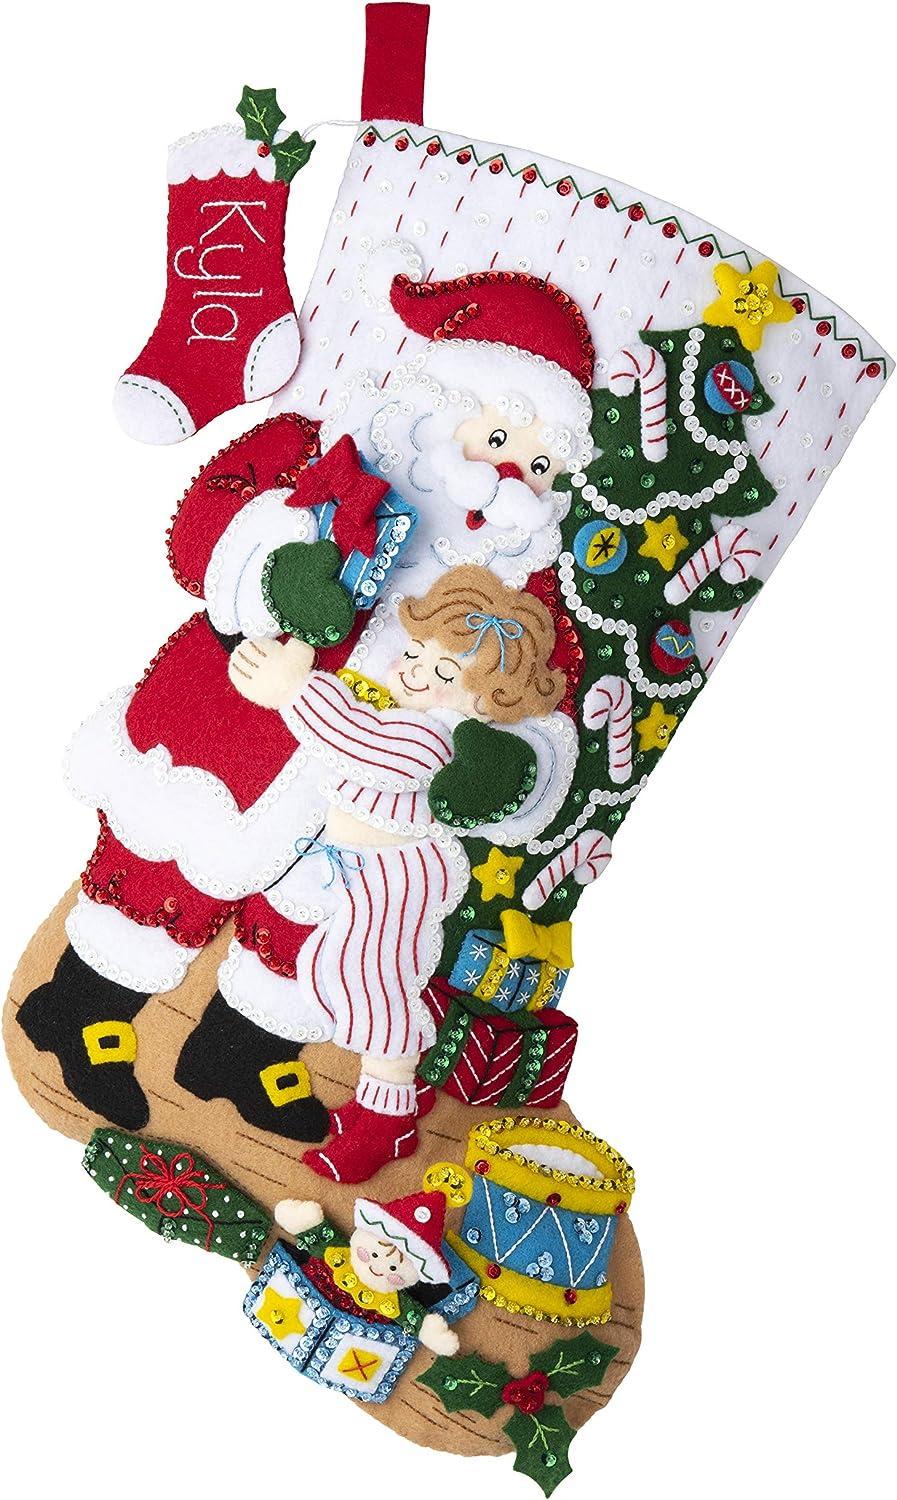  Bucilla Hugs, Felt Applique Christmas Stocking Kit, 18  (89253E)